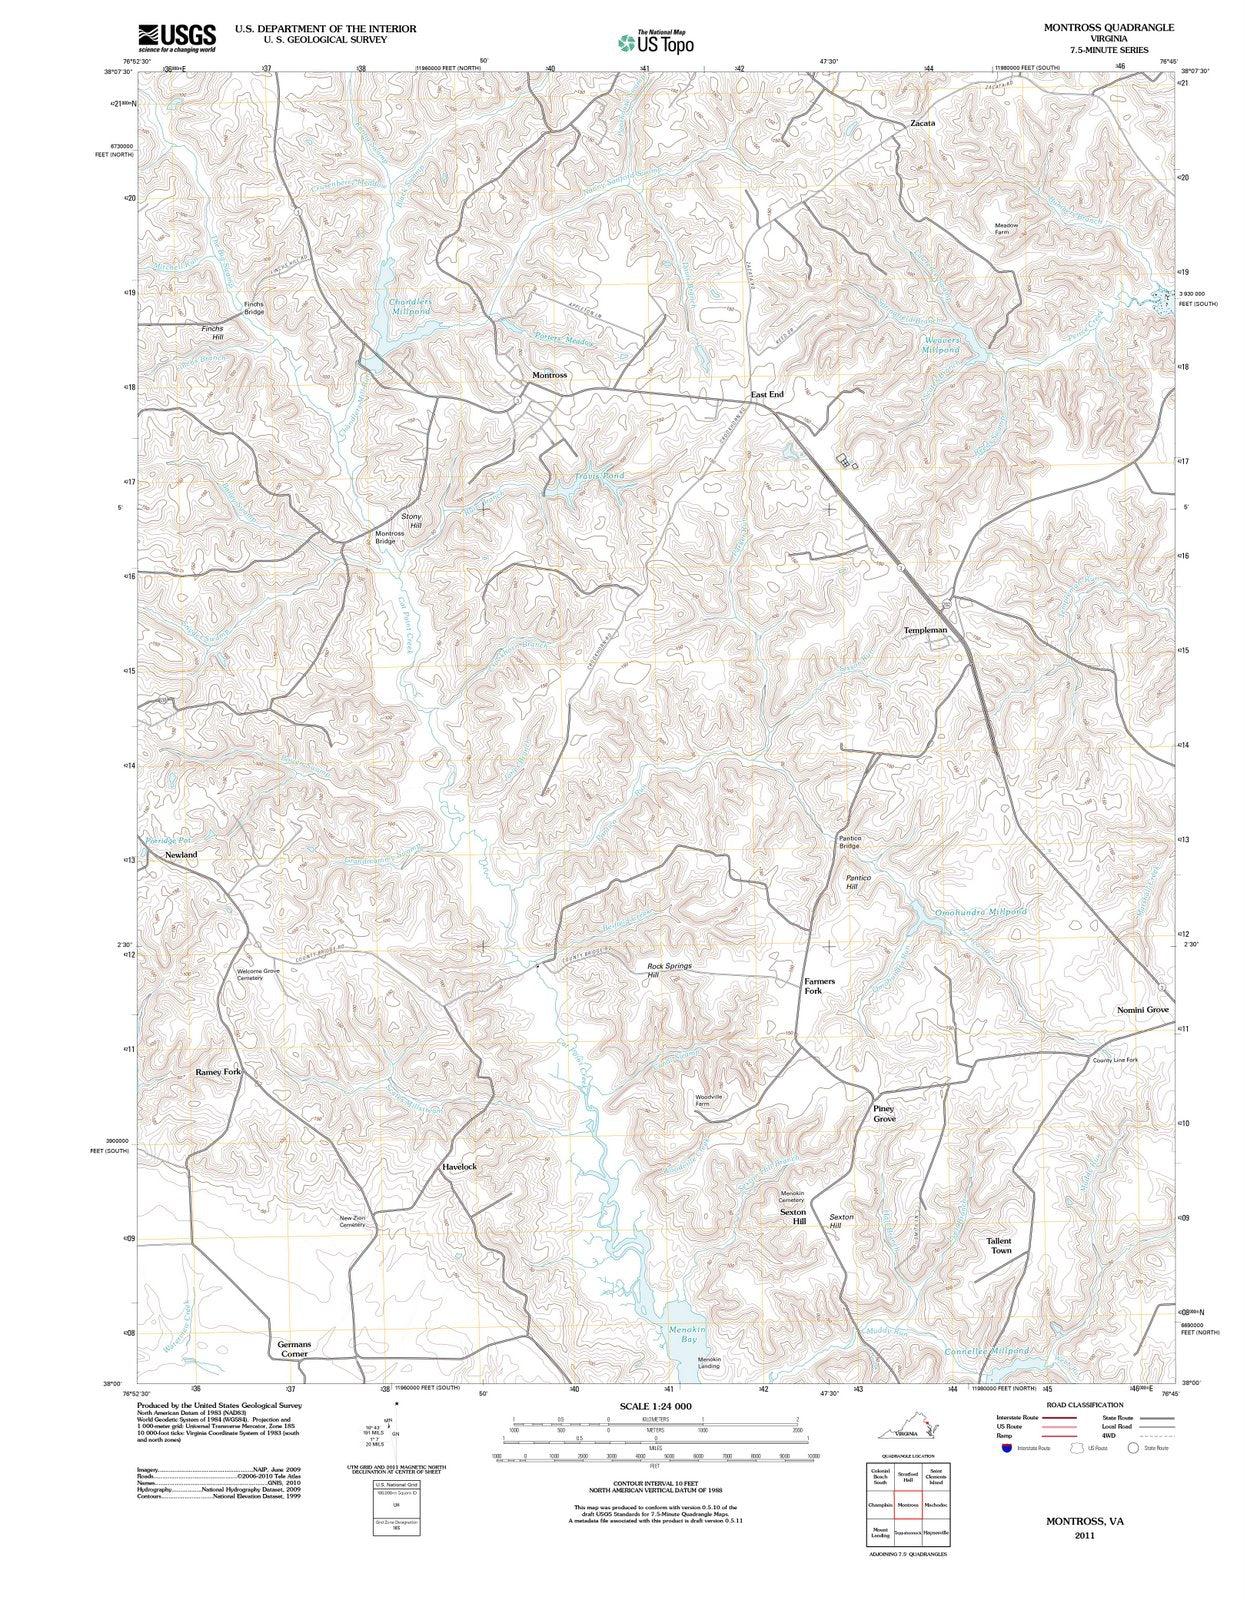 2011 Montross, VA - Virginia - USGS Topographic Map